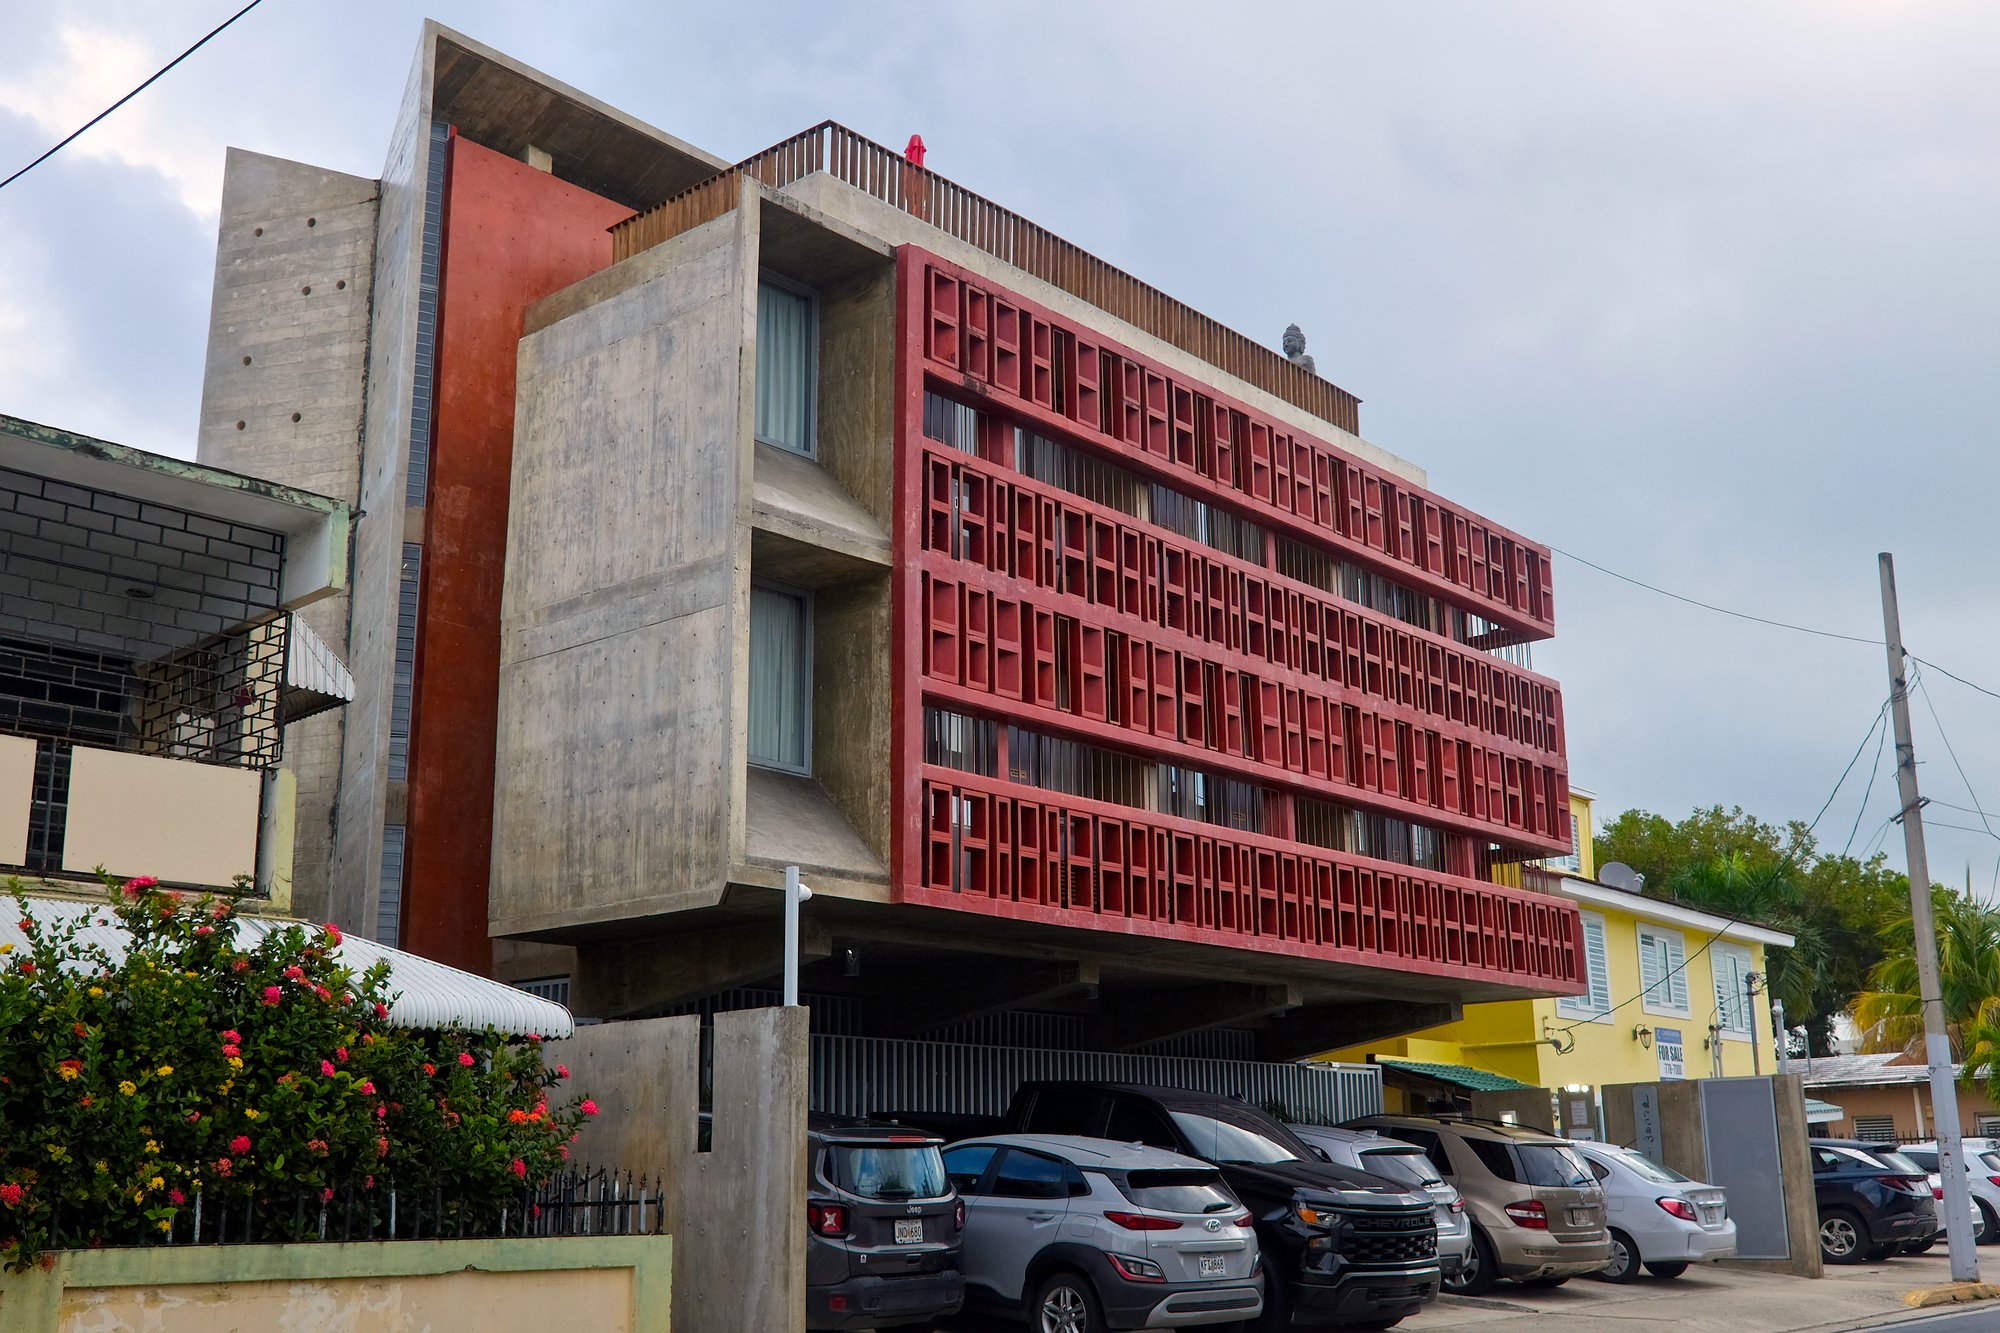 Exterior of San Juan's Dream Inn hotel, with unique, brutalist architecture